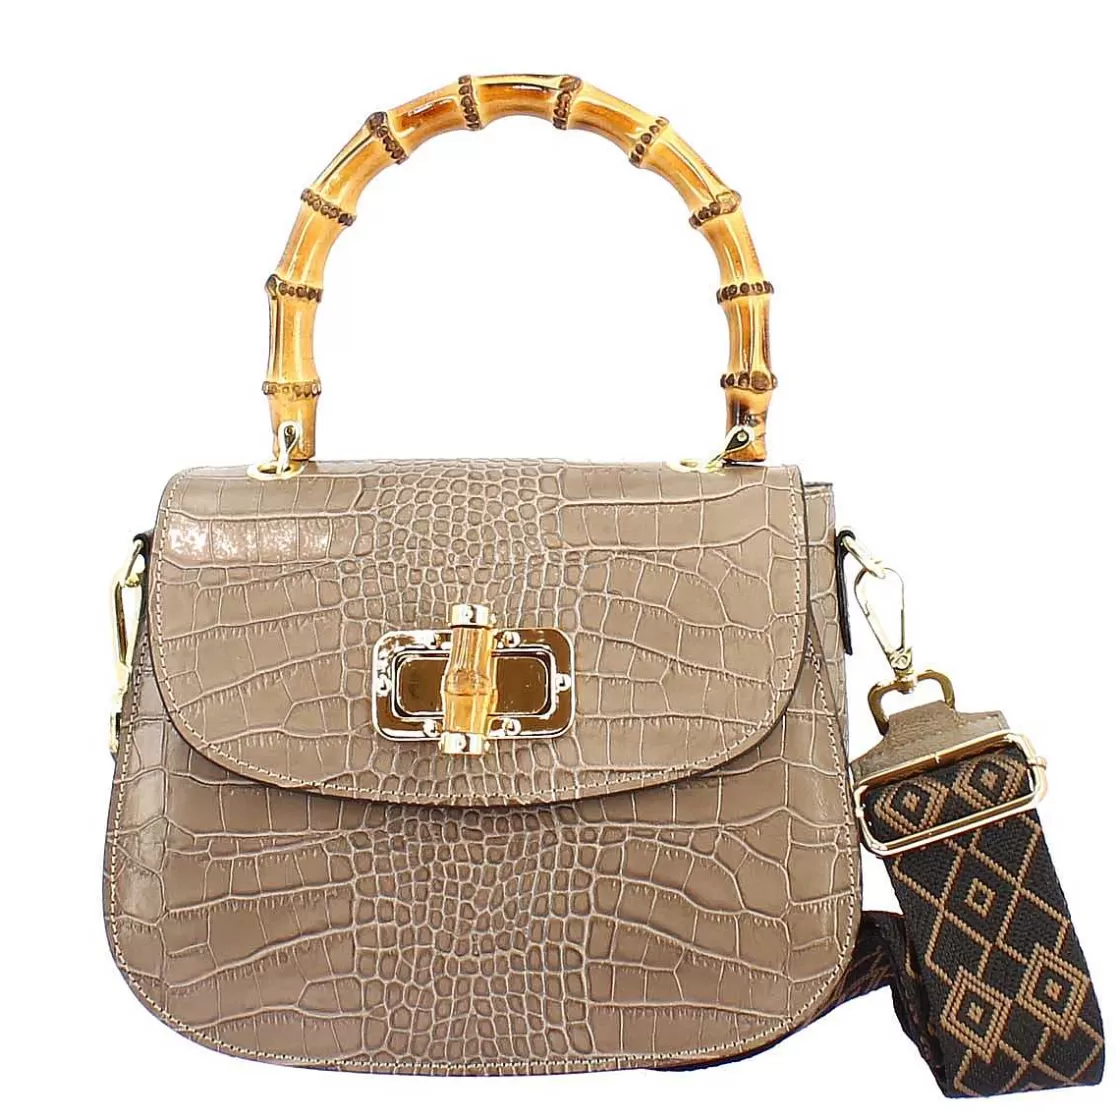 Leonardo Handmade Women'S Handbag In Beige Leather With Removable Shoulder Strap Discount